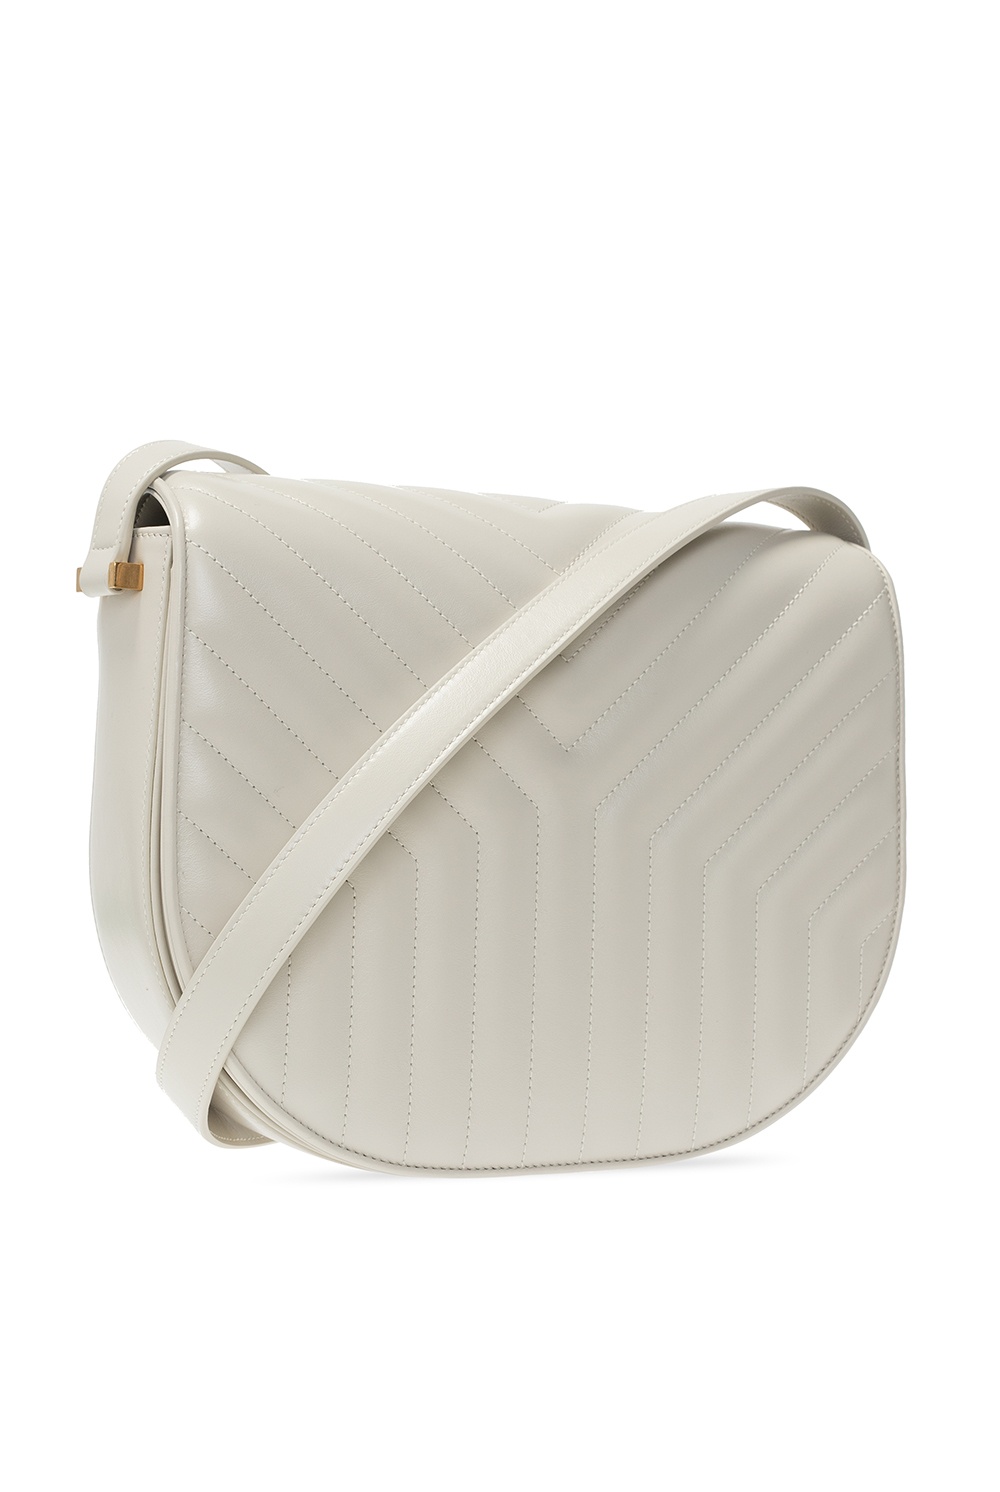 Saint Laurent ‘Joan’ shoulder bag